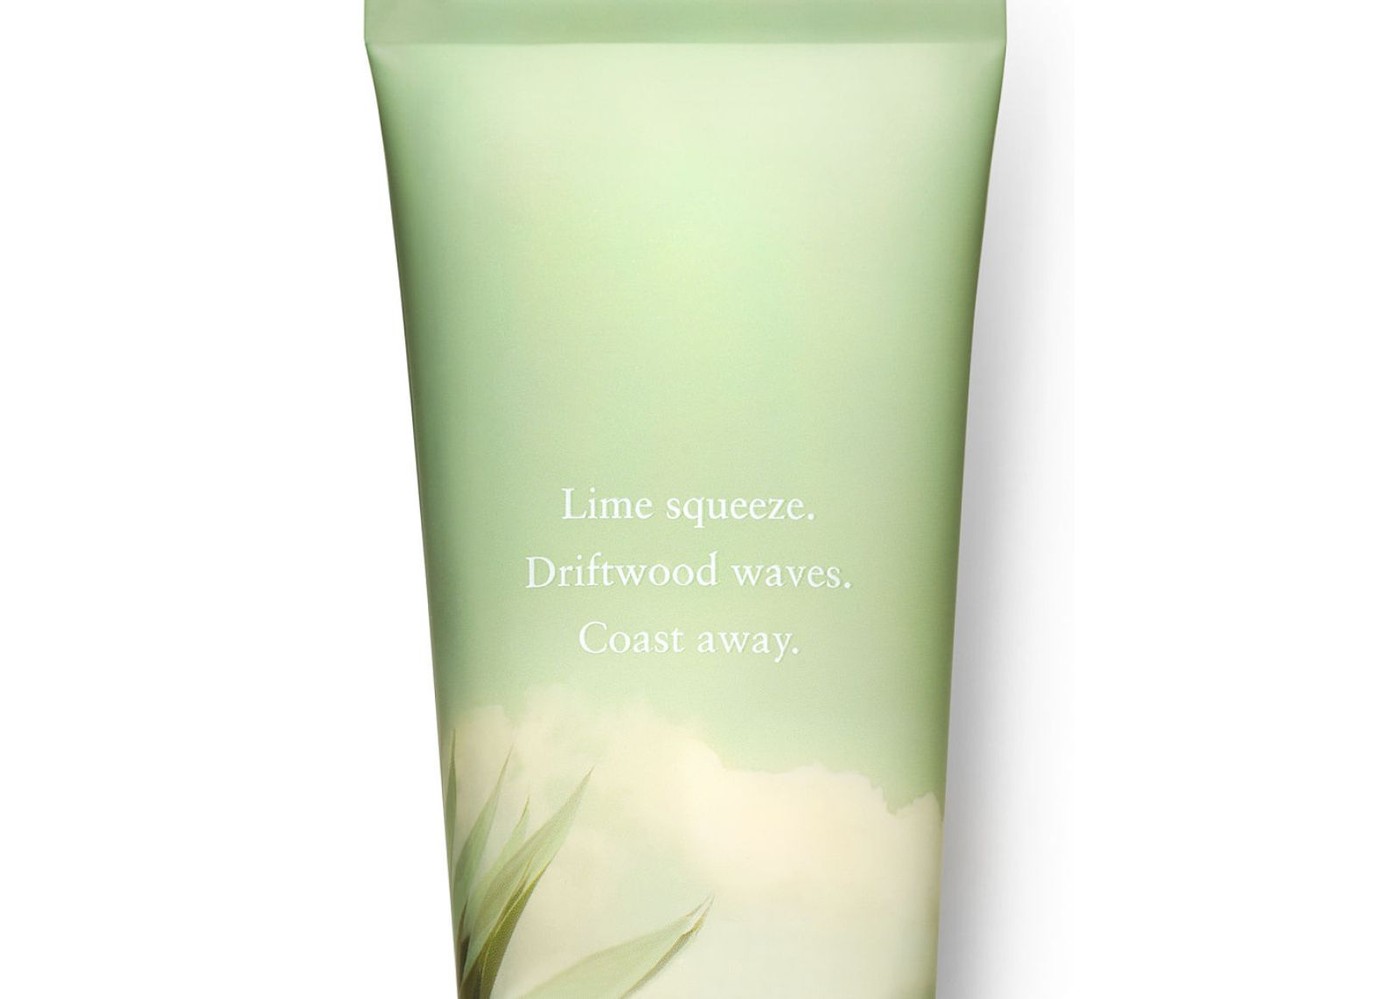 Подарочный набор Victoria's Secret Fresh Jade (Fragrance Body Mist/Fragrance Lotion)